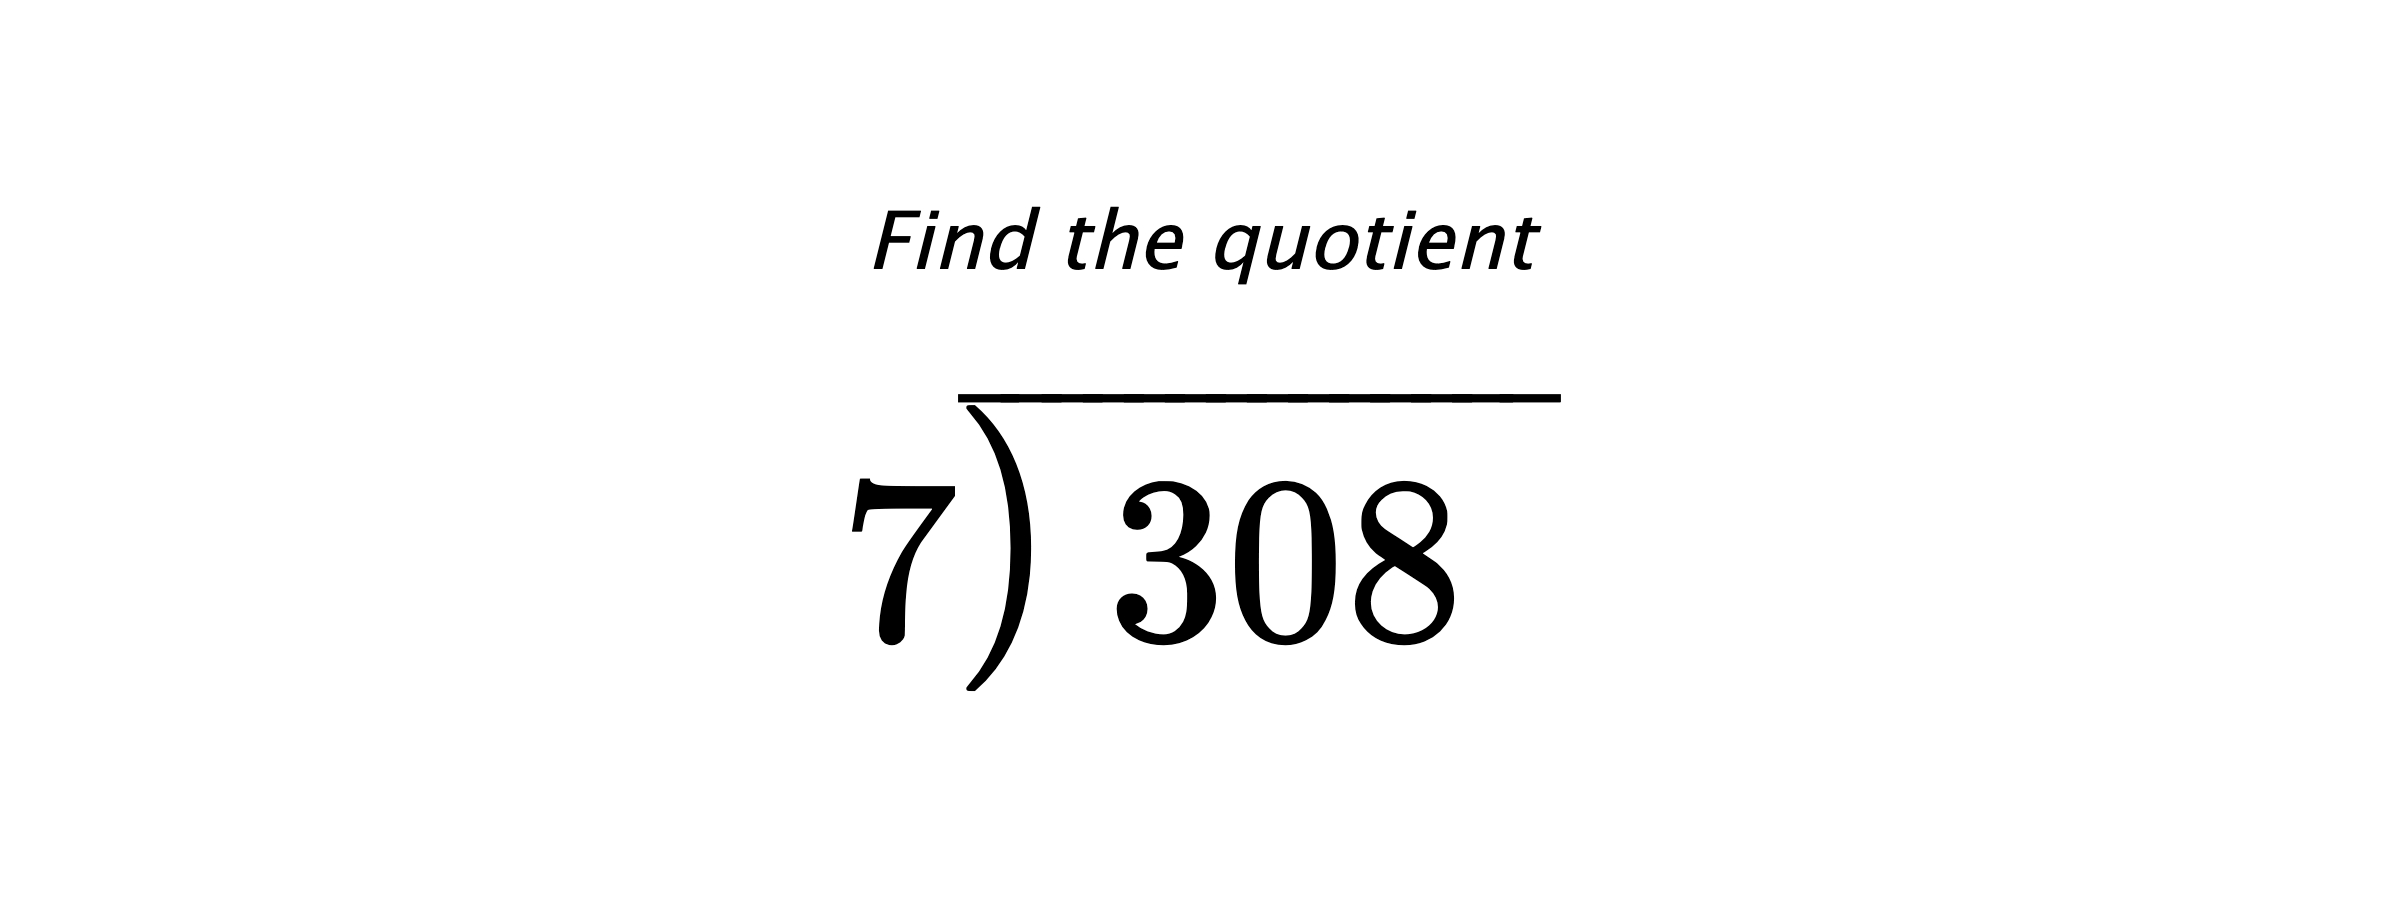 Find the quotient $ 7{\overline{\smash{\raise.3ex\hbox{$\big)$}}\,308\phantom{)}}} $